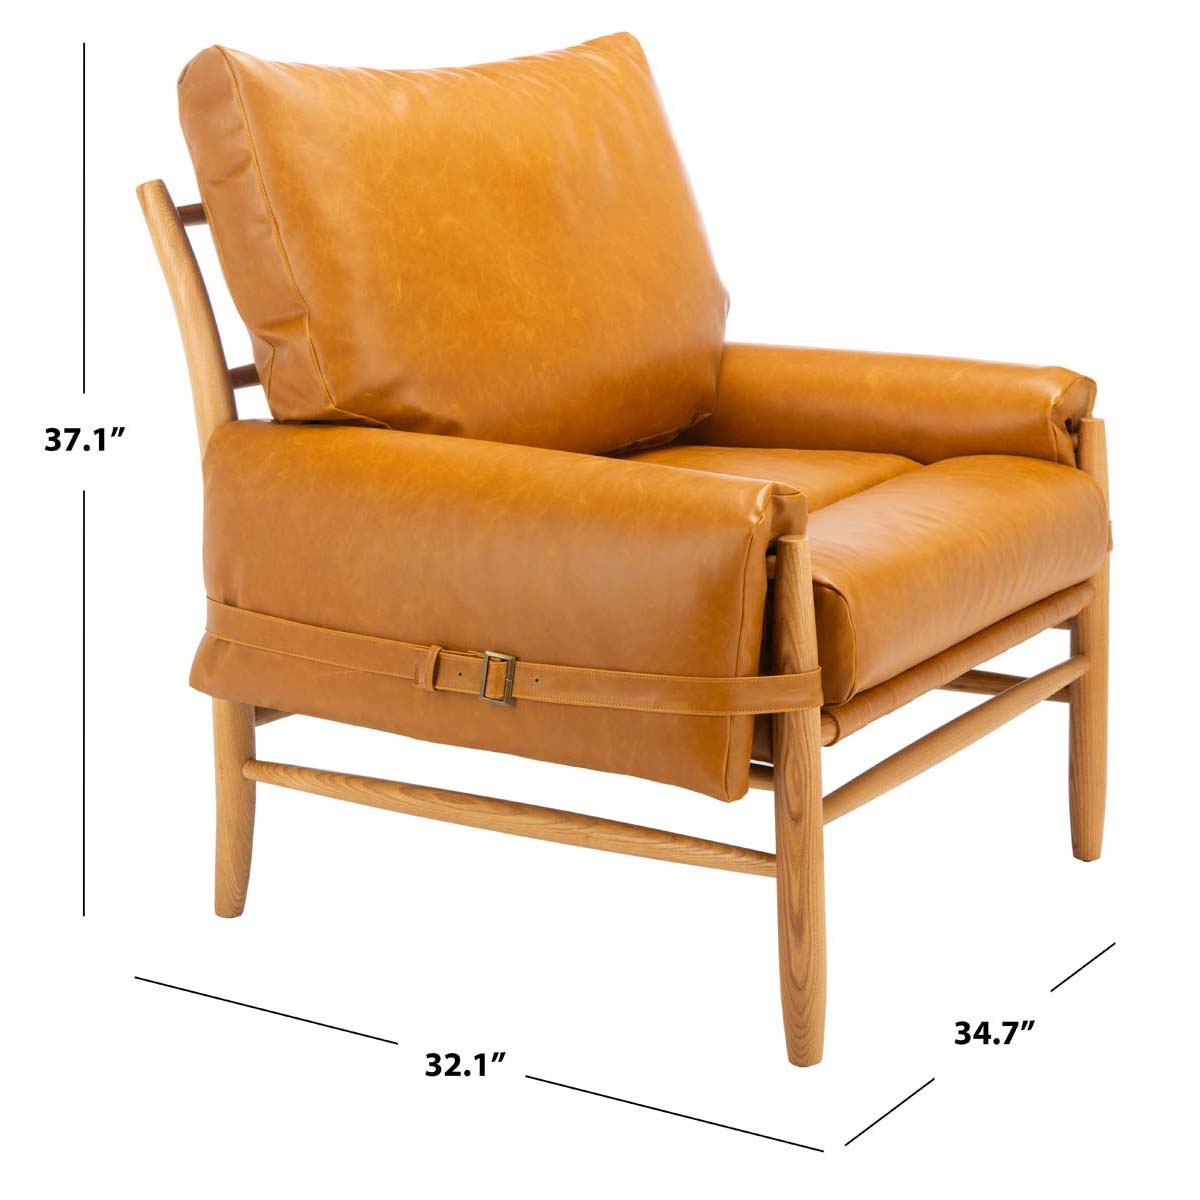 Safavieh Oslo Mid Century Arm Chair, ACH4509 - Caramel/Natural